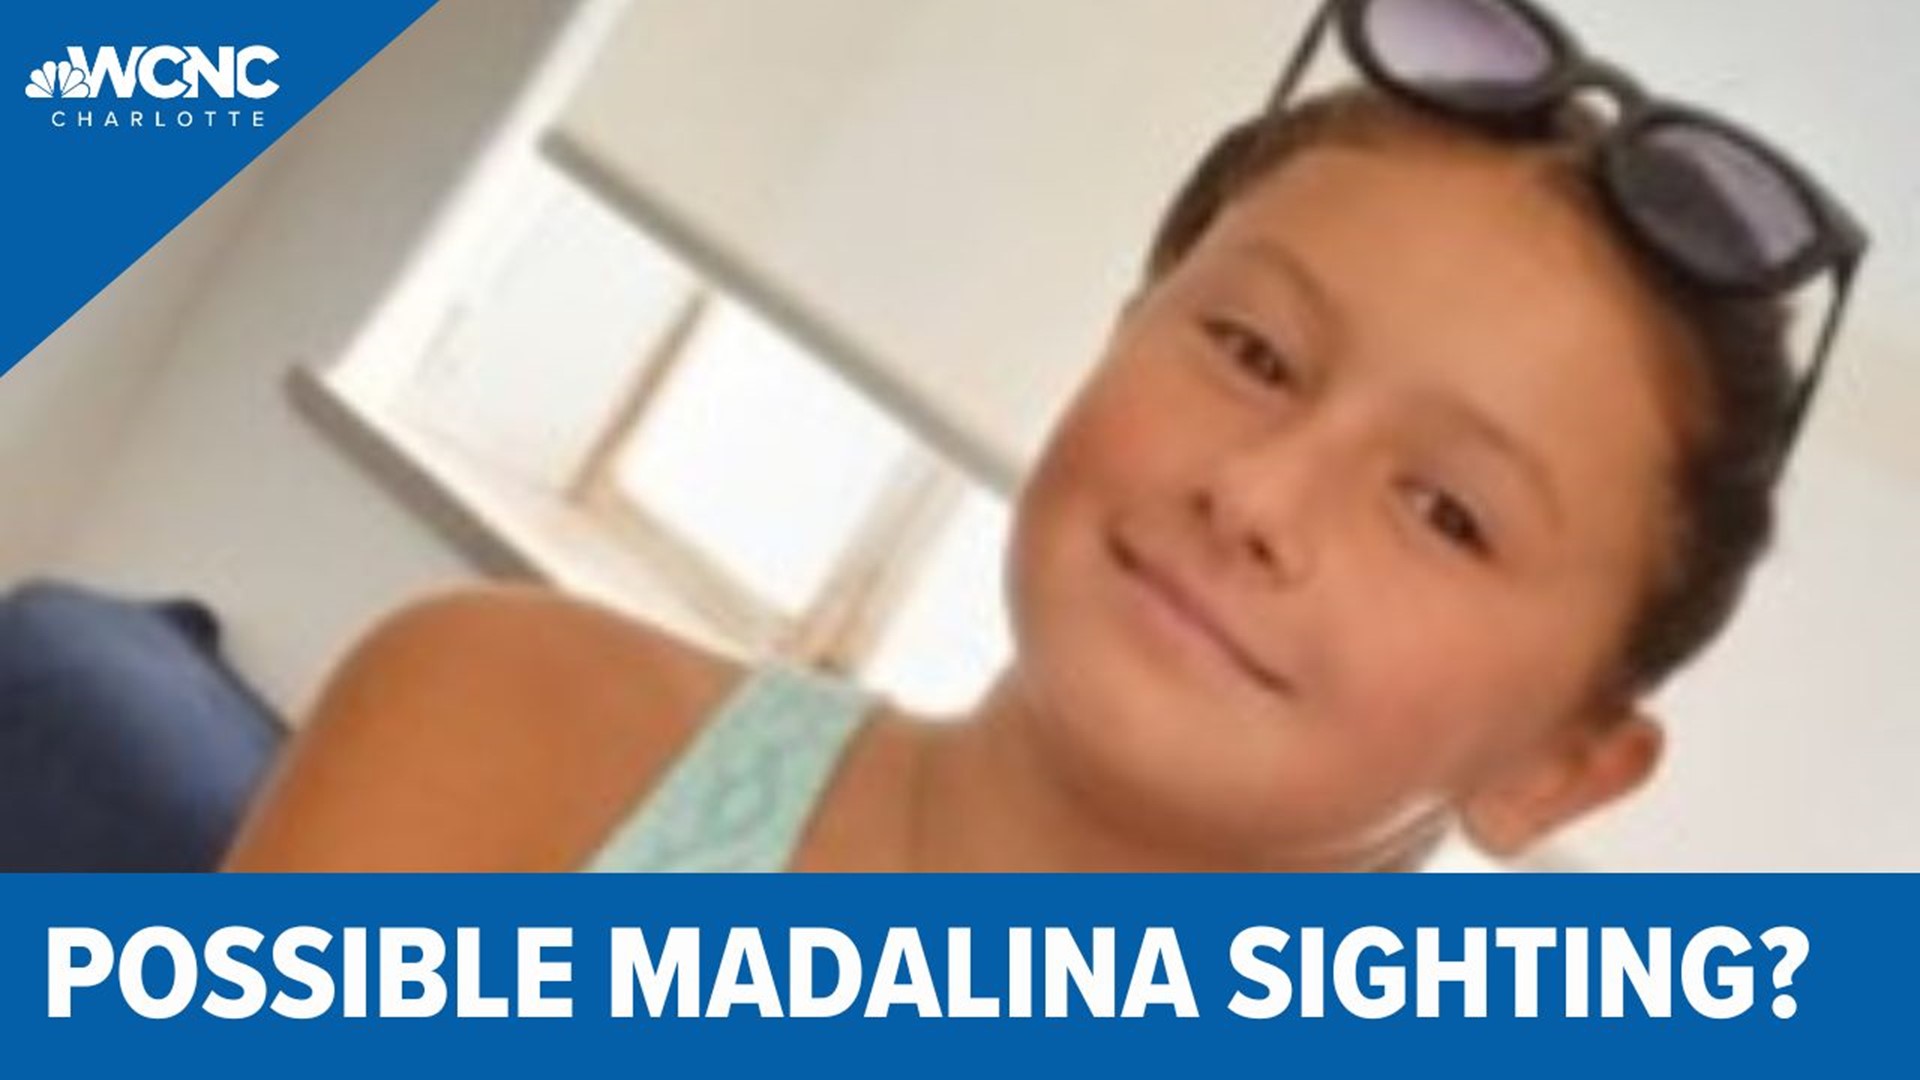 Madalina was last seen in public back in November on a school bus.